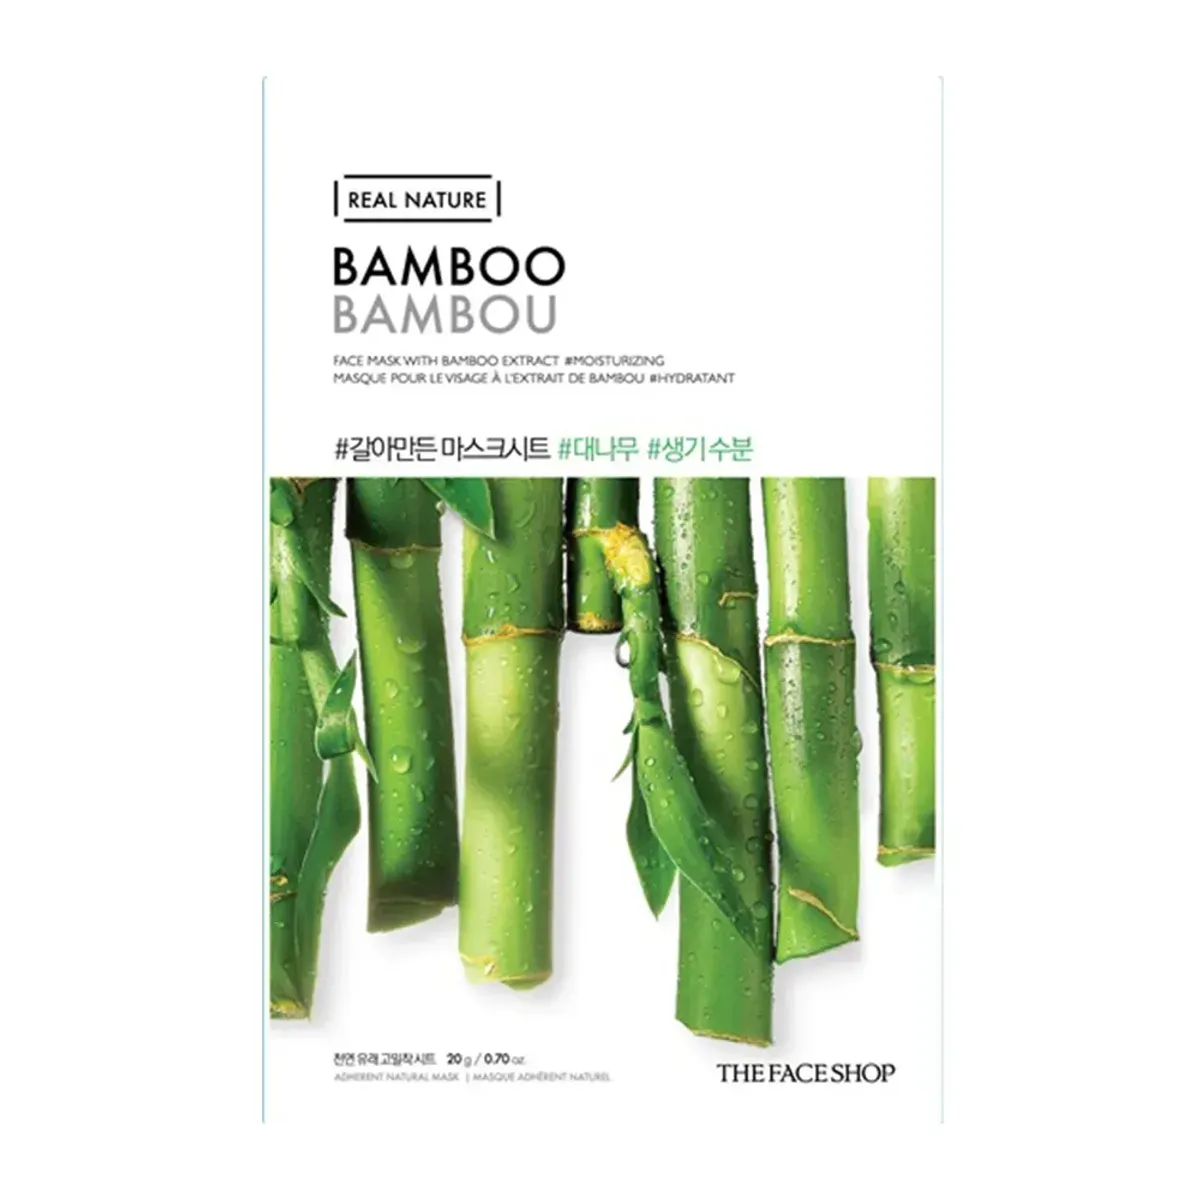 mat-na-cung-cap-nuoc-tu-tre-thefaceshop-real-nature-mask-sheet-bamboo-20g-6